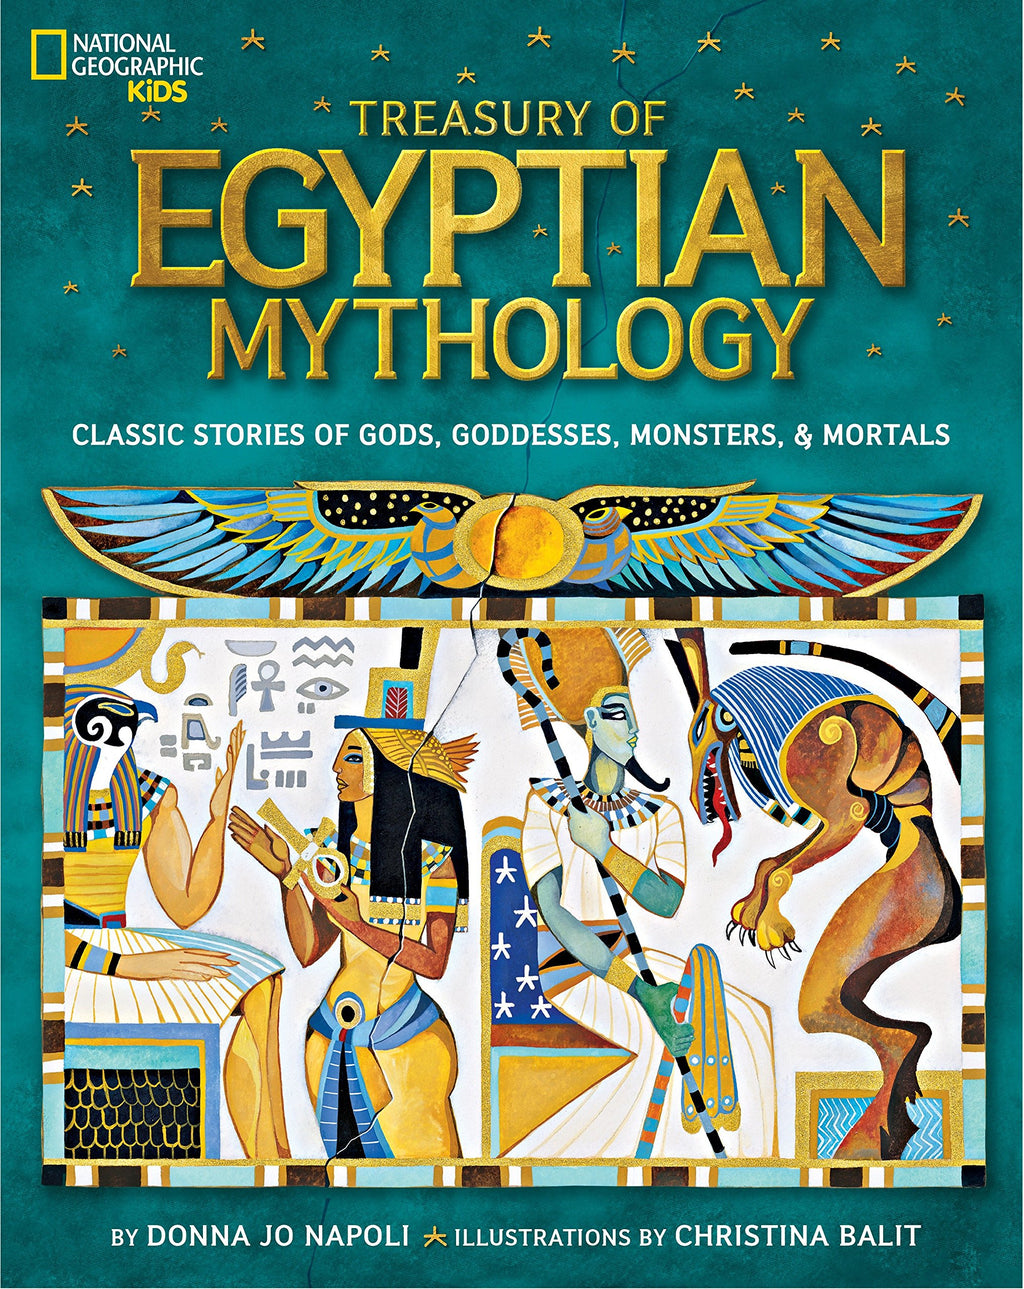 Treasury of Egyptian Mythology by Donna Jo Napoli & Christina Balit